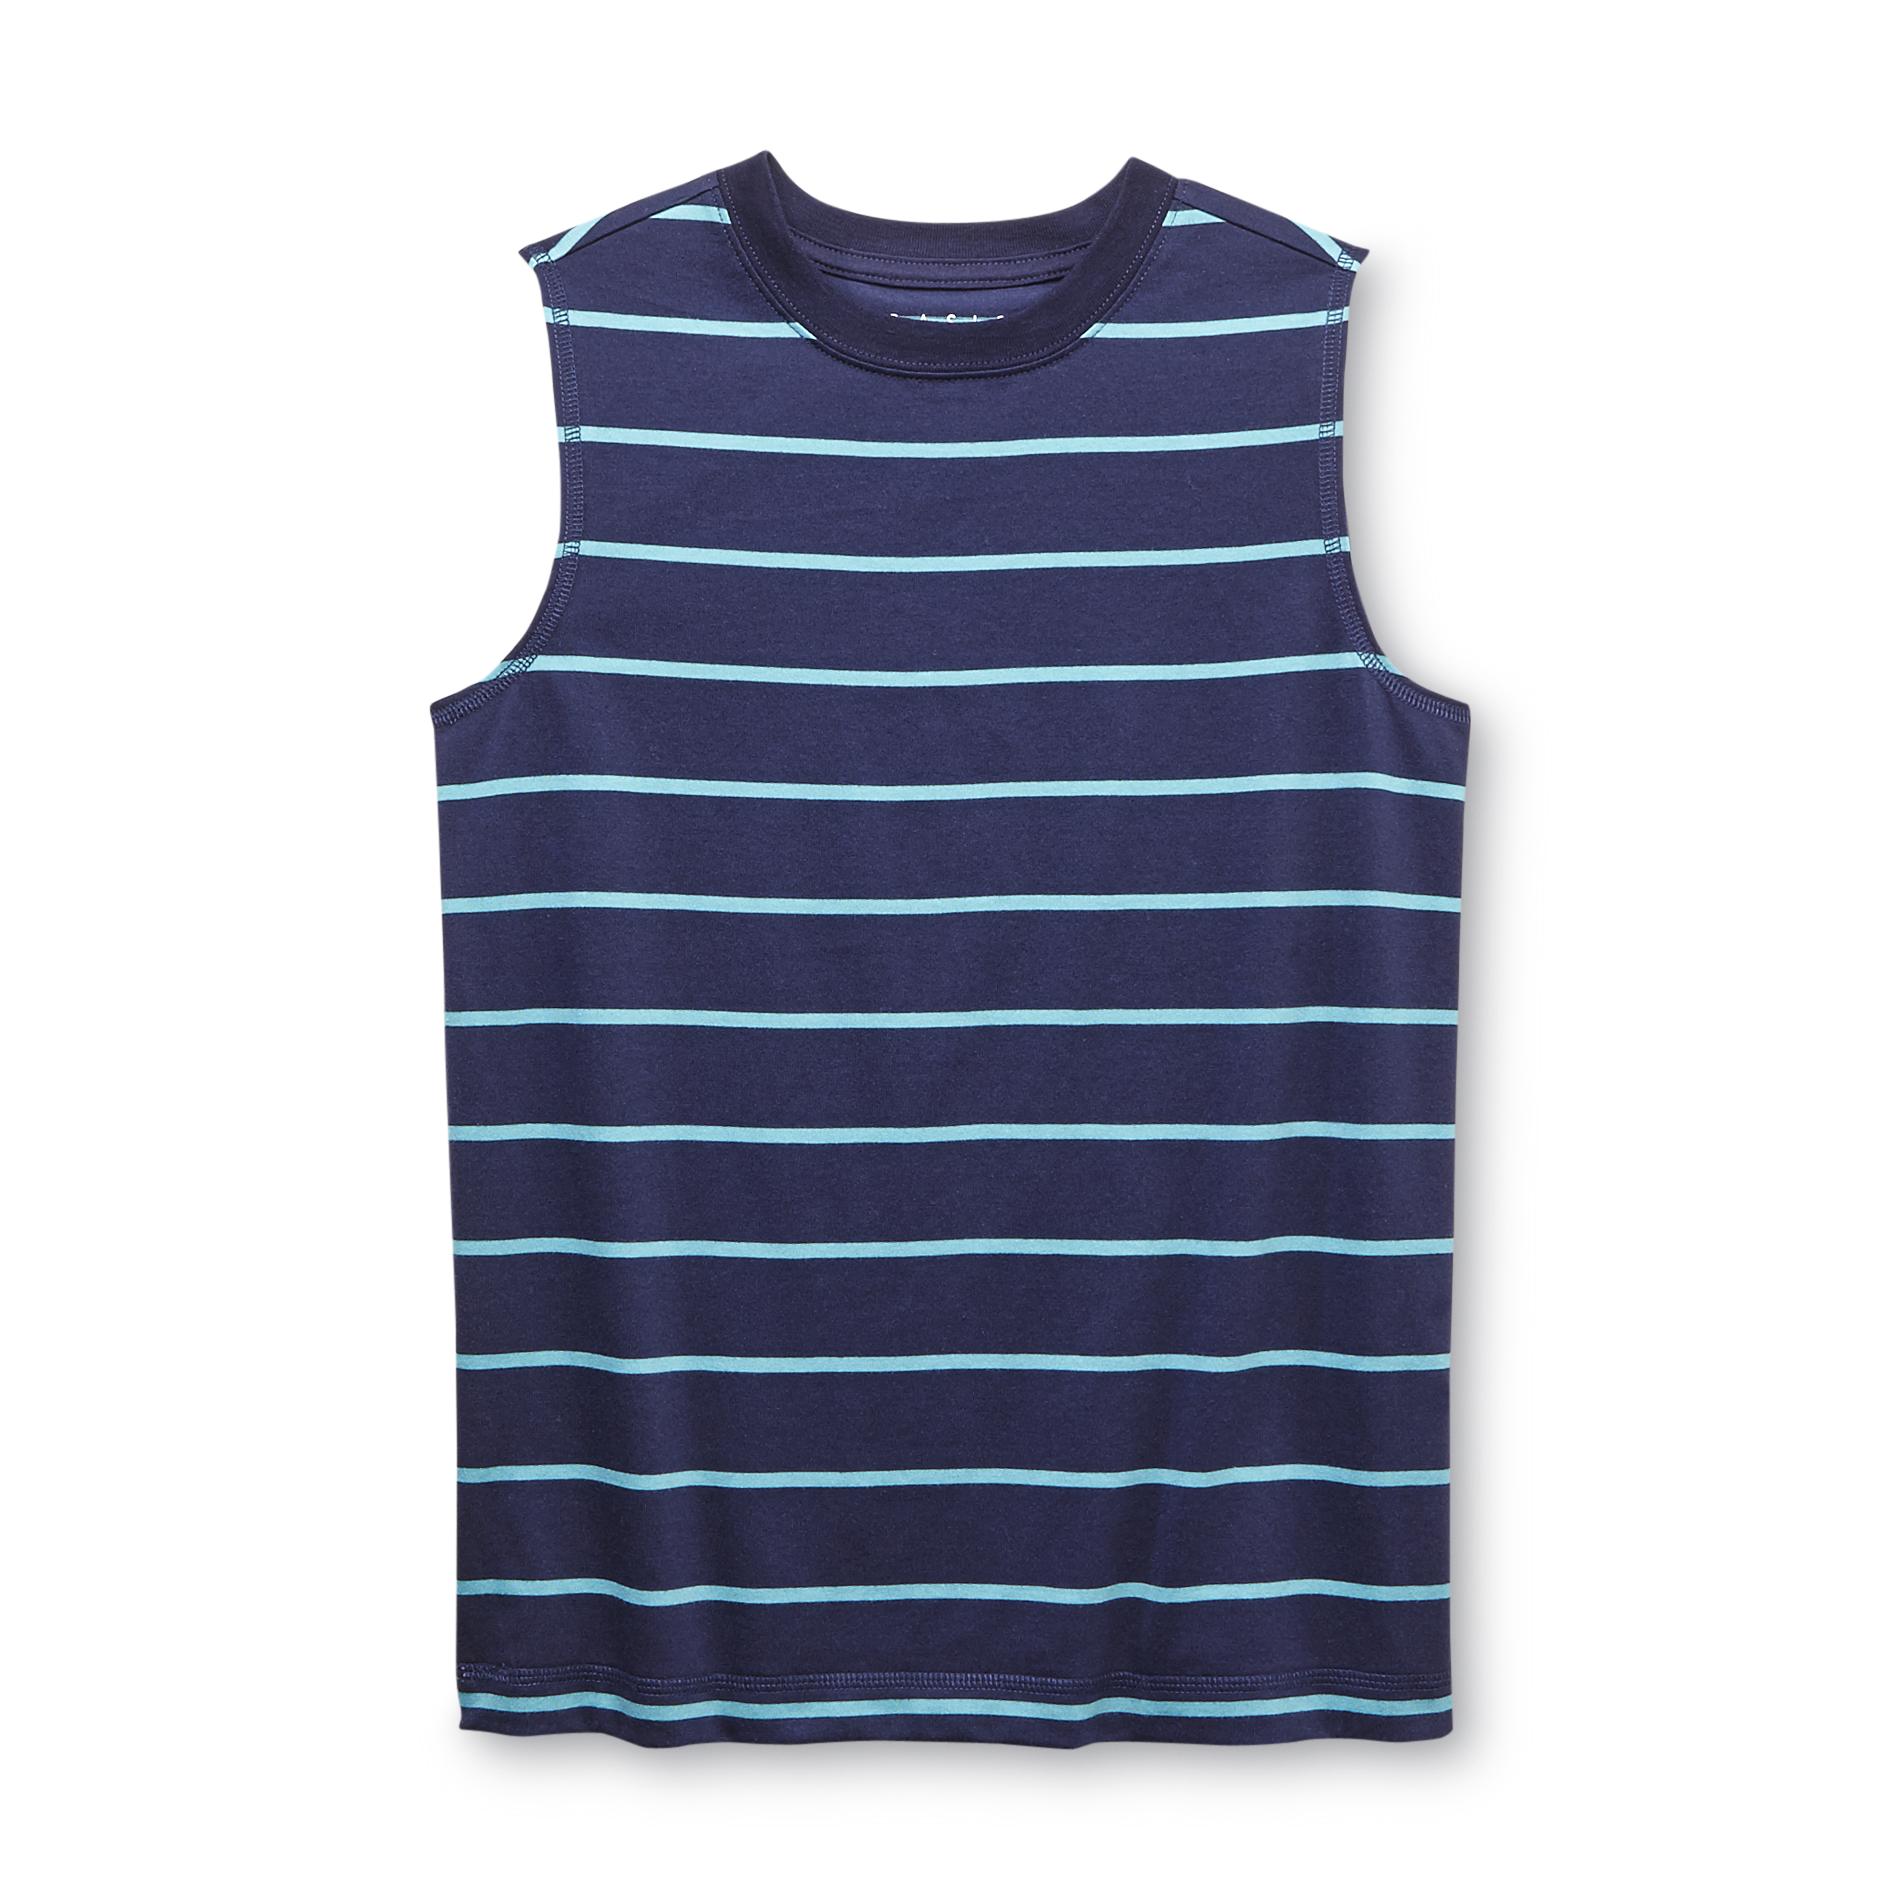 Boy's Muscle Shirt - Striped